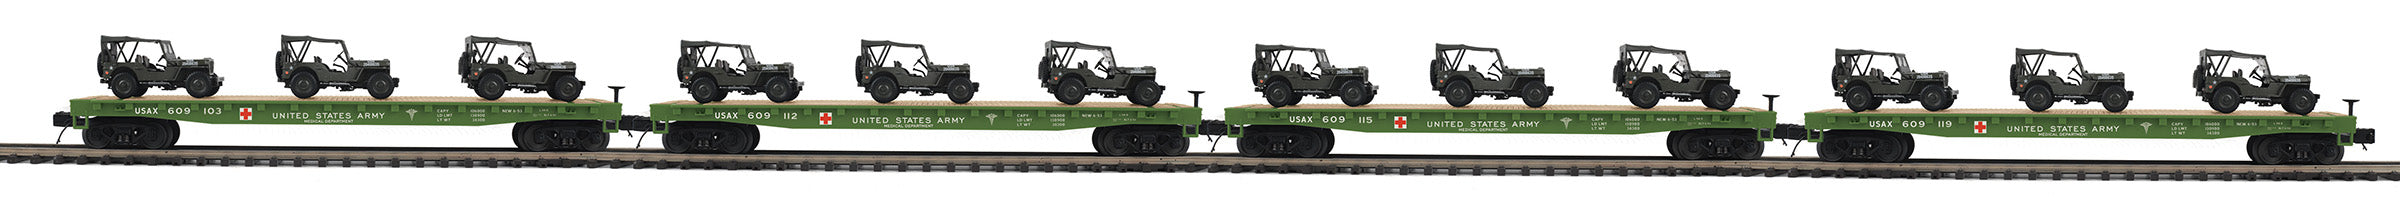 MTH 20-92368 - Flat Car "U.S. Army" w/ (3) Willy’s Transport Vehicles (4-Car) - Set #2 (MASH)